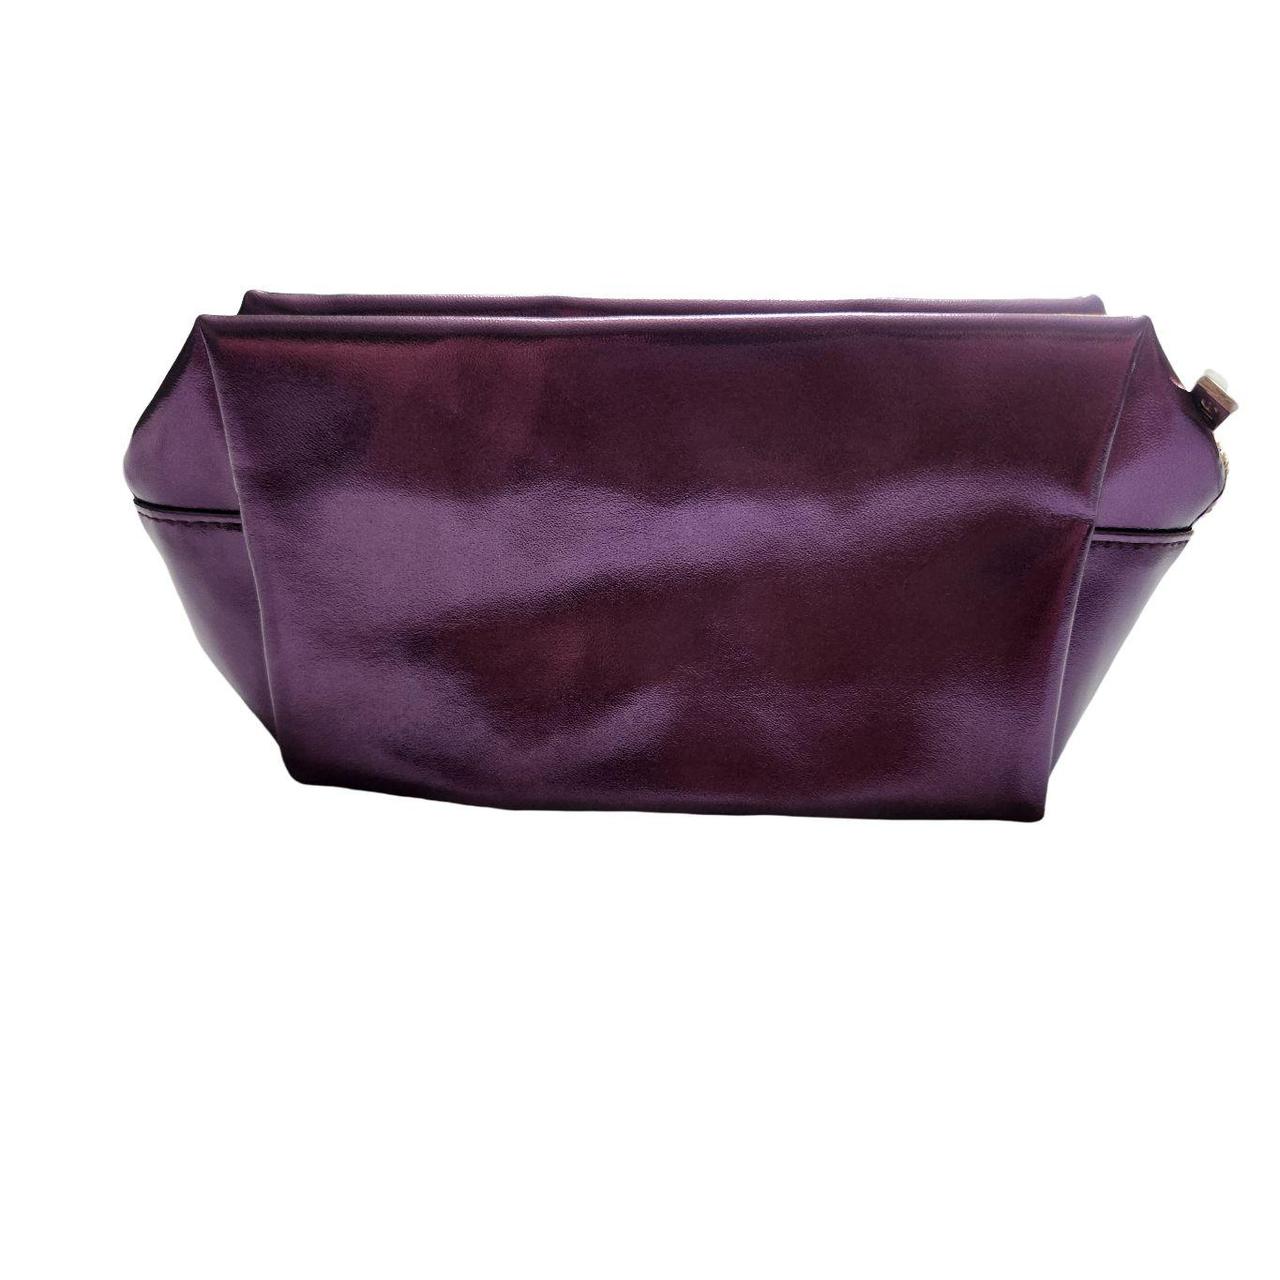 Product Image 2 - •Shiny metallic purple makeup bag